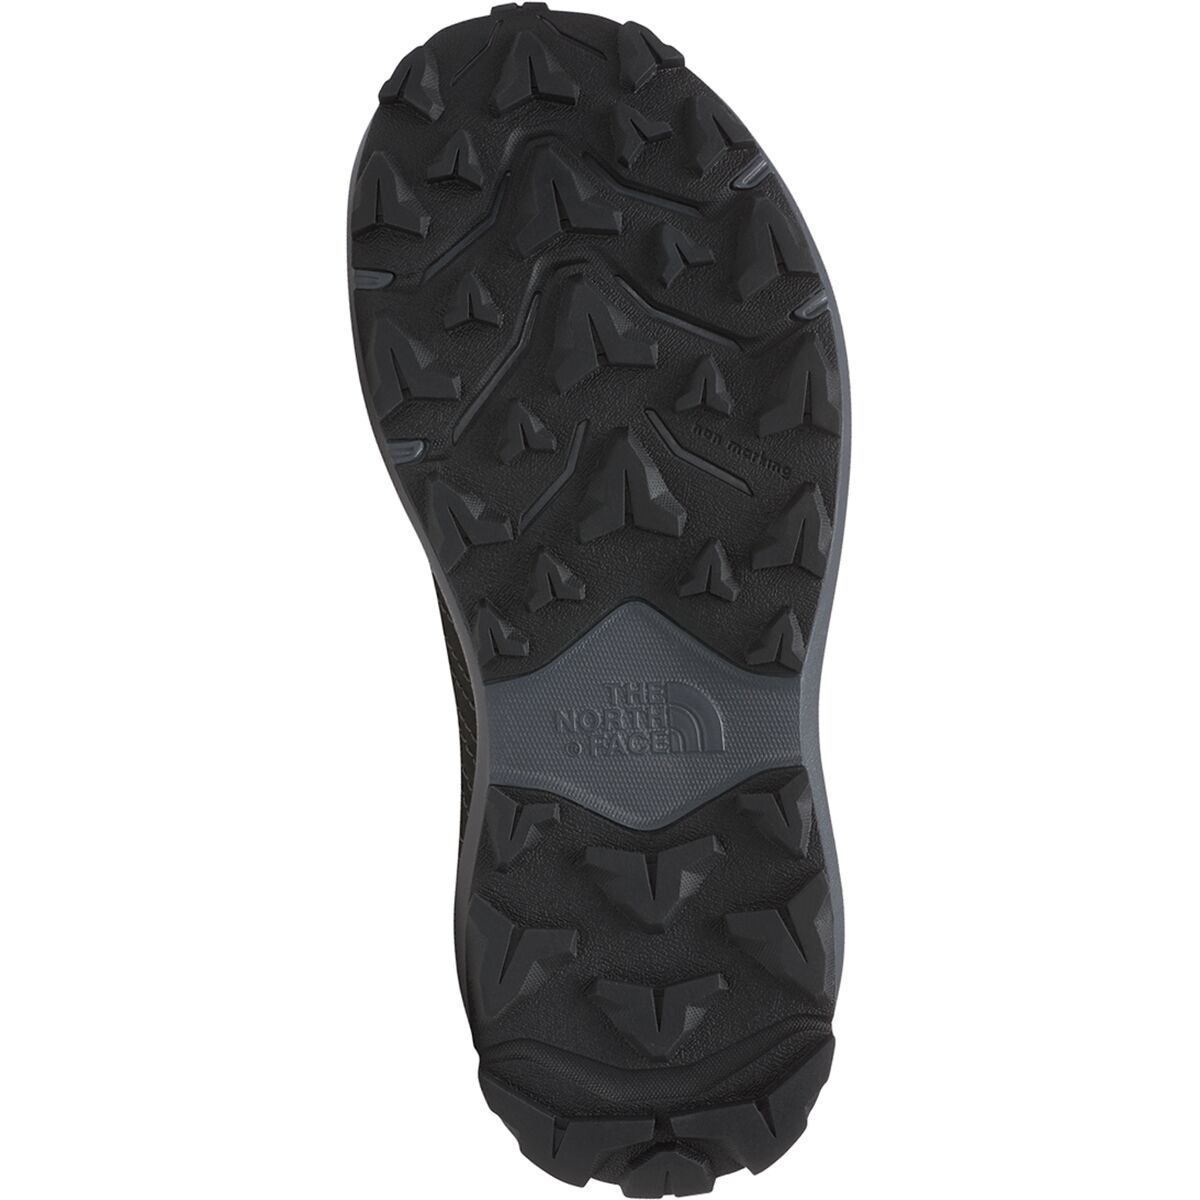 Kids’ Fastpack Hiker Mid Waterproof Boots